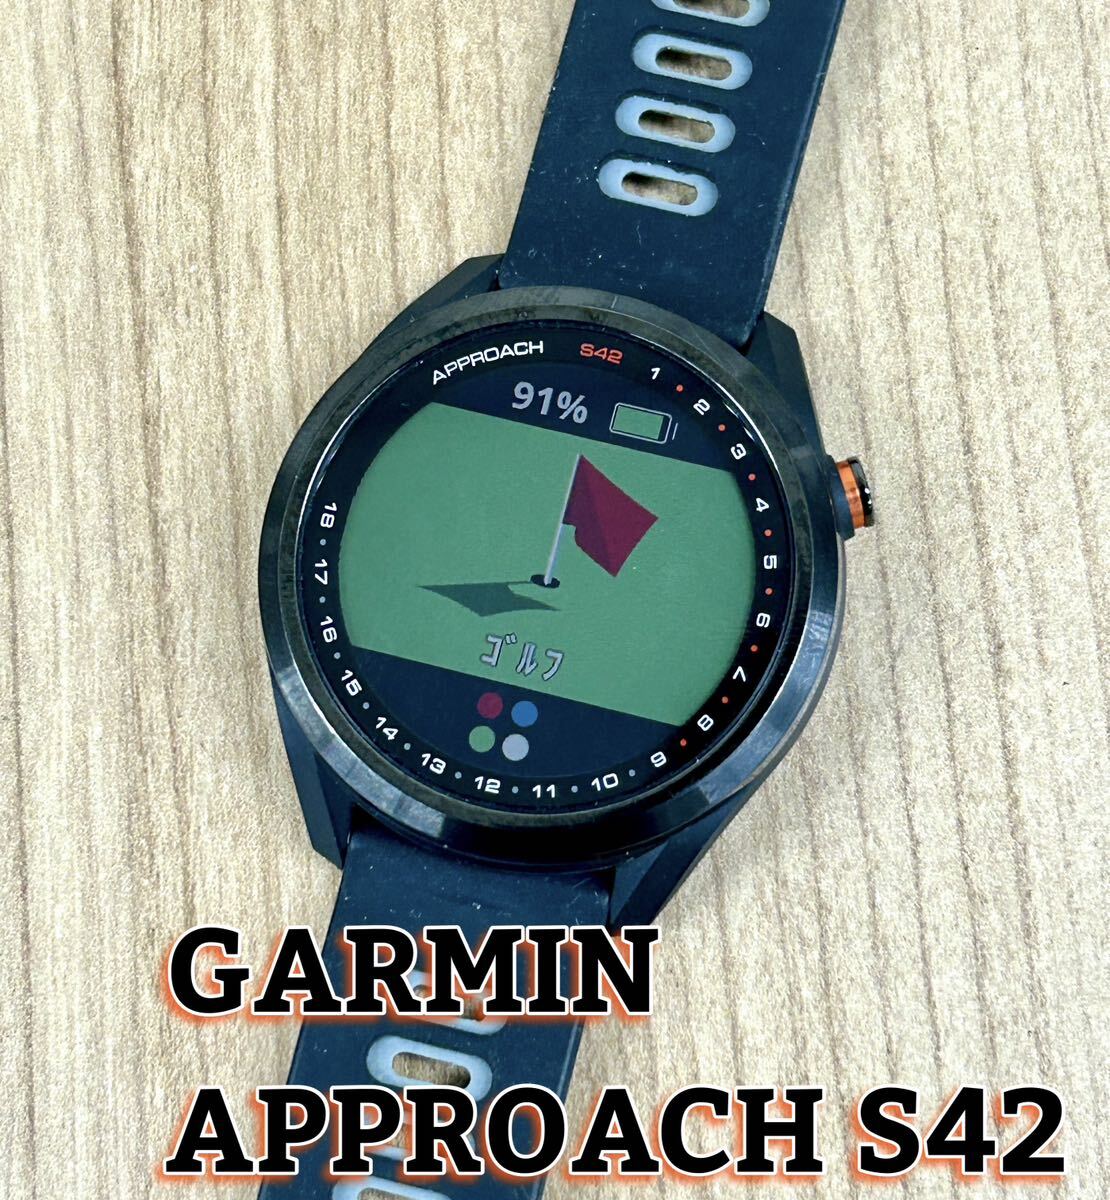 GARMIN ガーミン Approach S42 ゴルフナビ スマートウォッチ ブラック 腕時計型 GPSナビ 管:0426の画像1